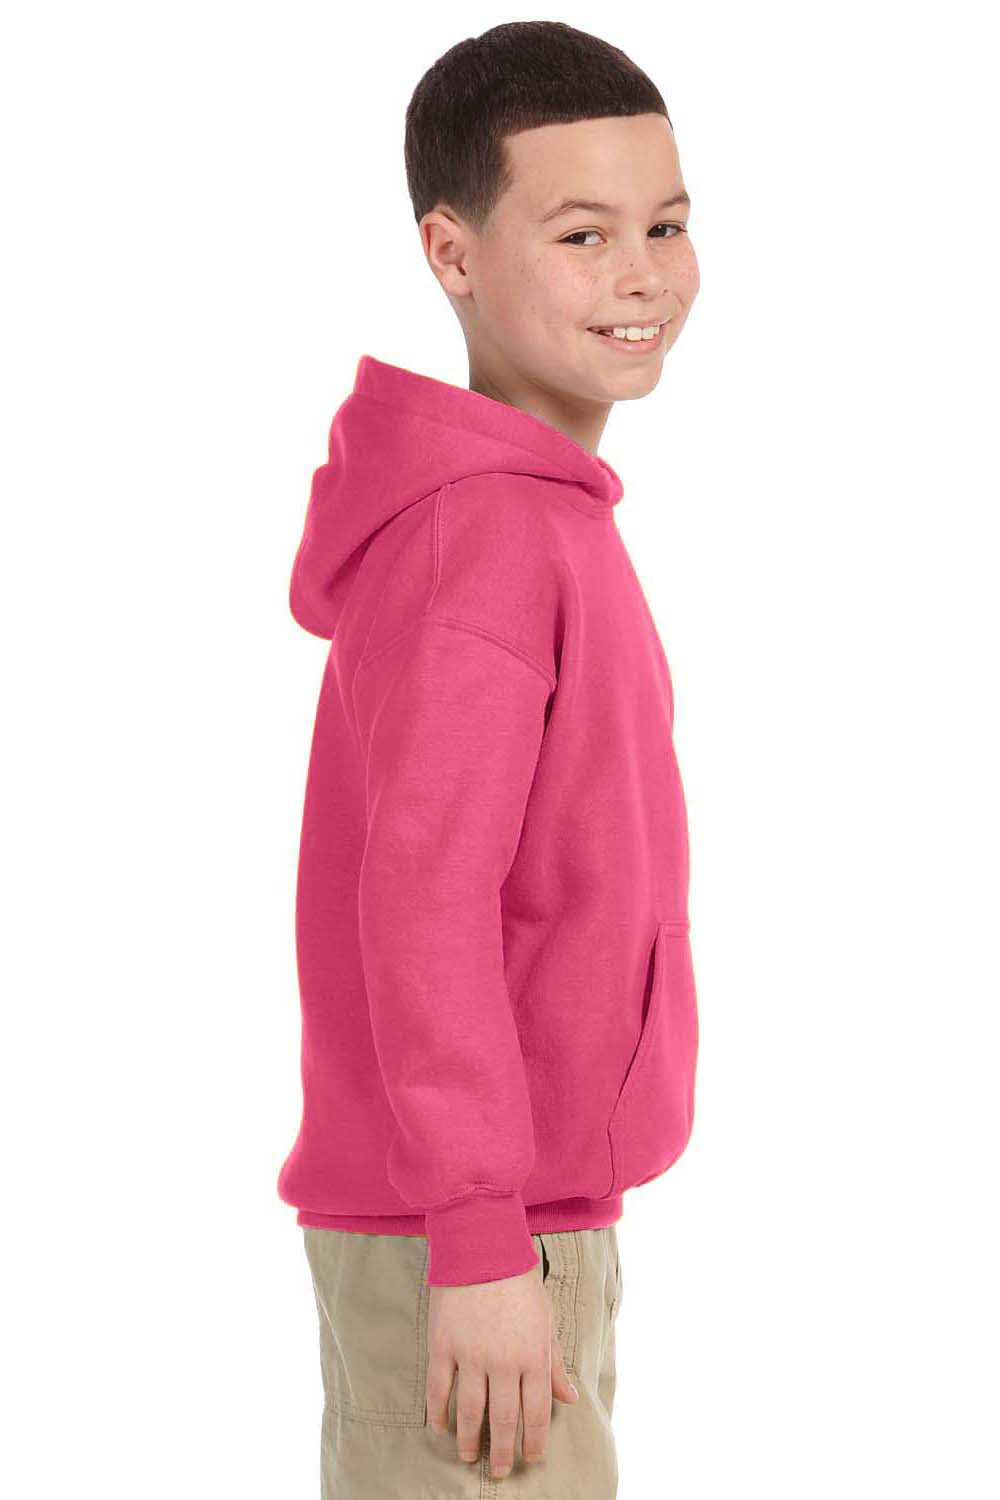 Gildan G185B Youth Hooded Sweatshirt Hoodie Safety Pink Side